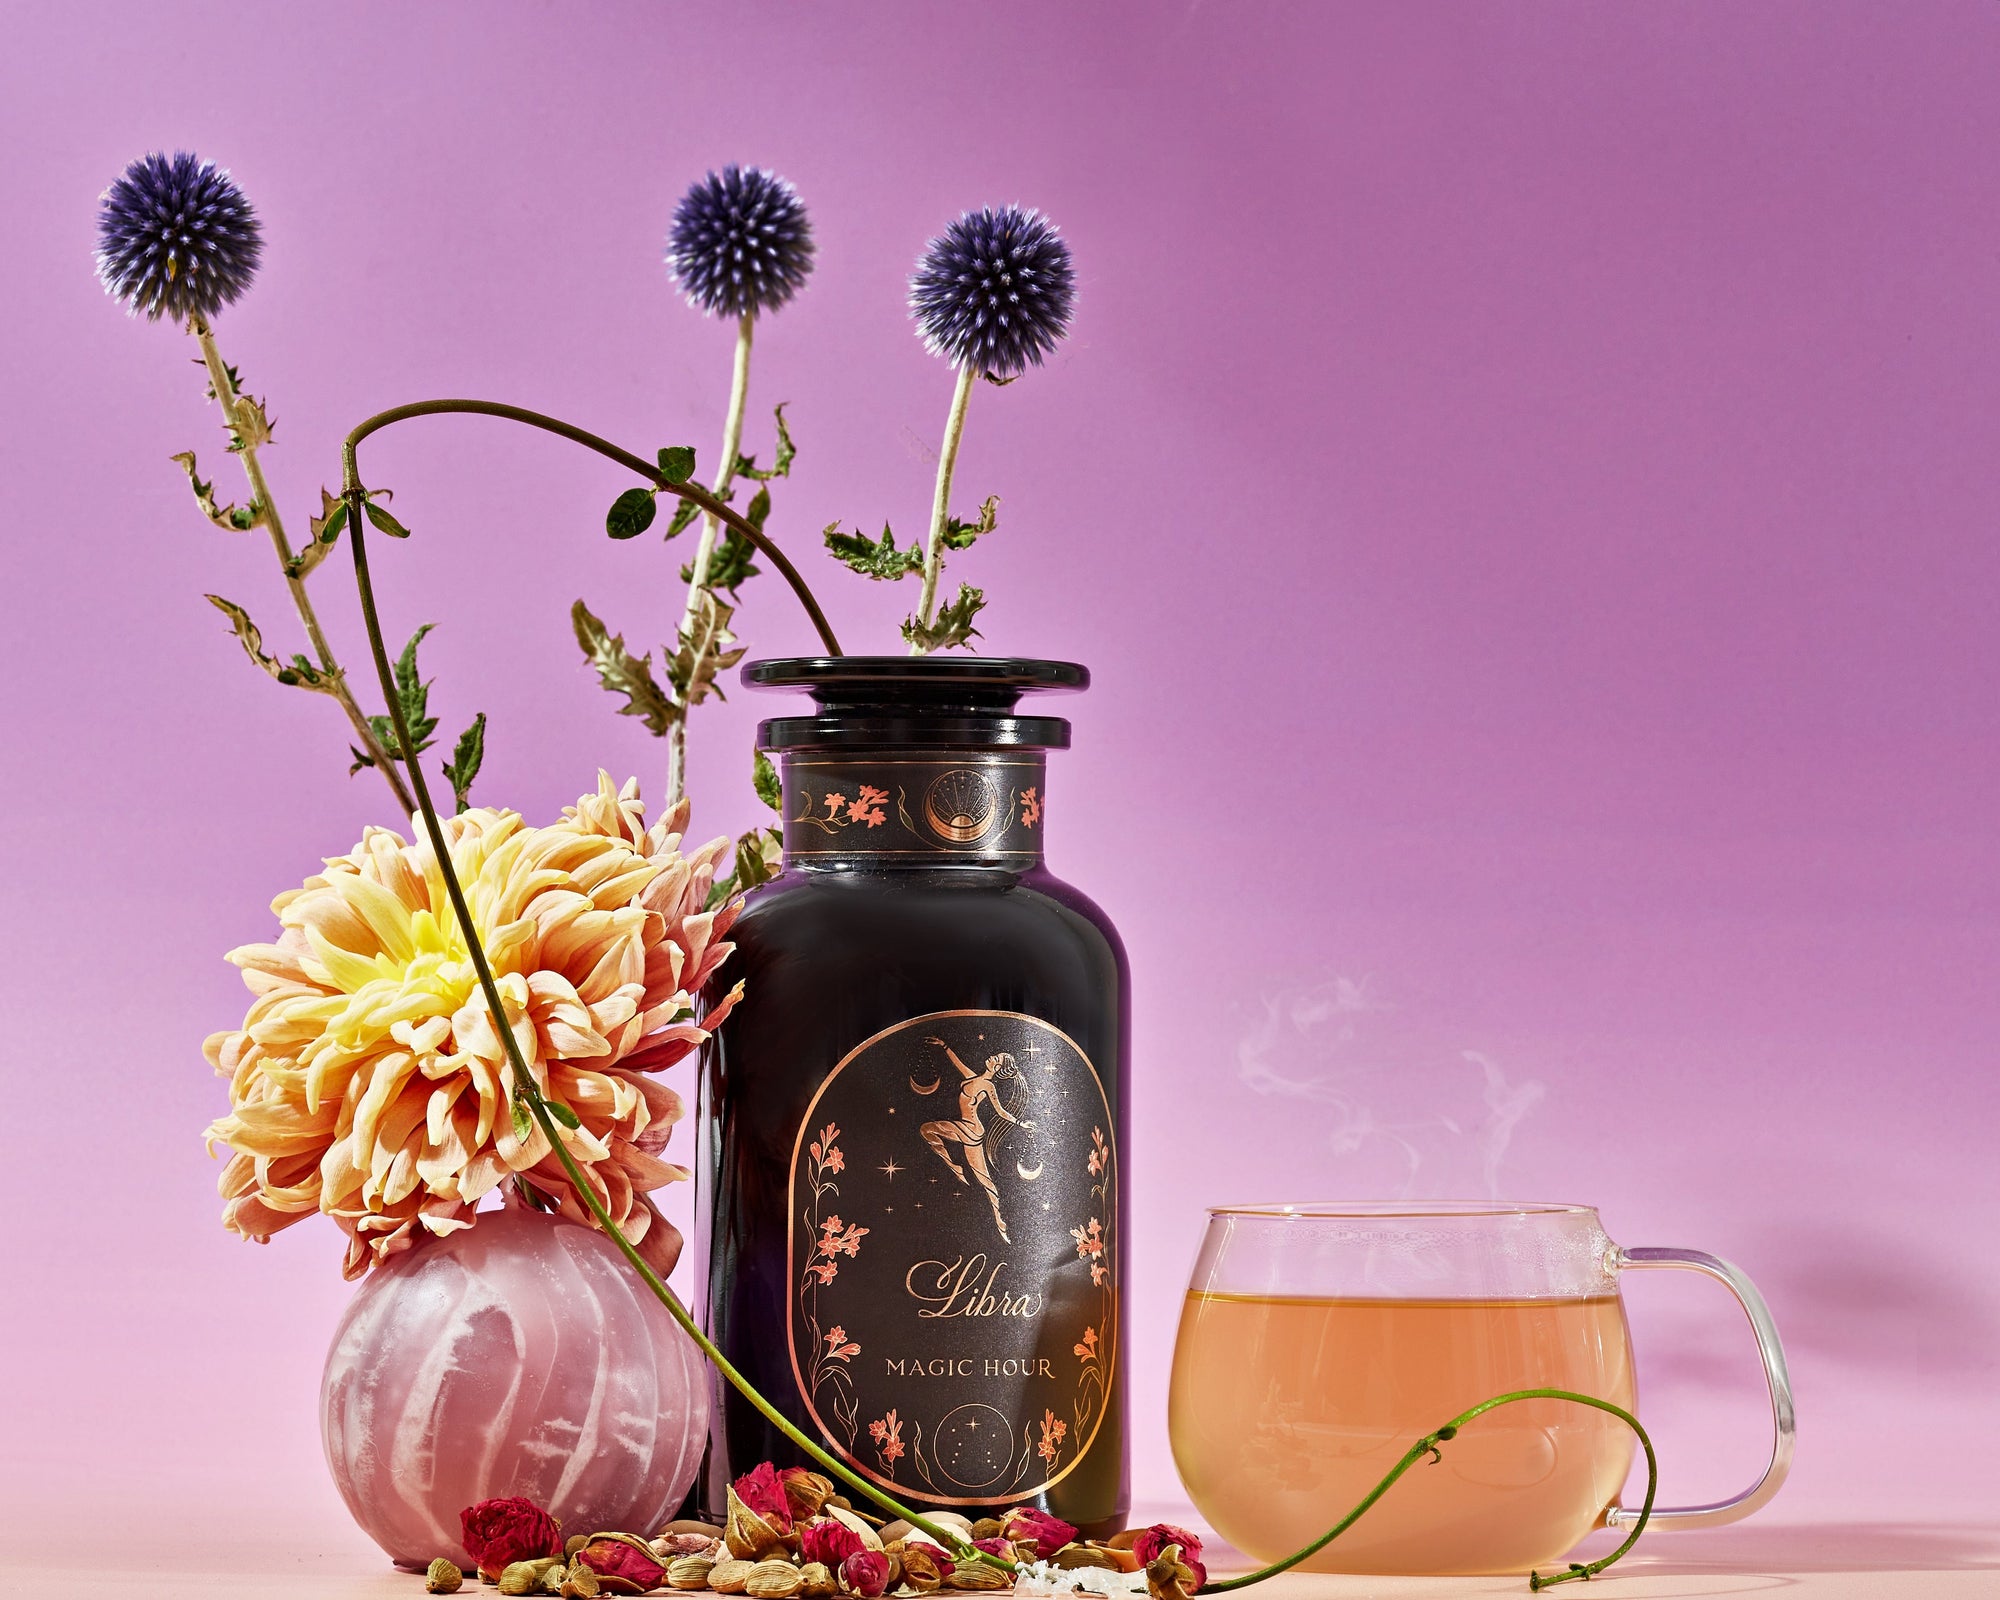 Love & Intimacy Box with Raspberry Earl White Tea - Tea & Transformation subscription box | Organic healing tea & Gifts